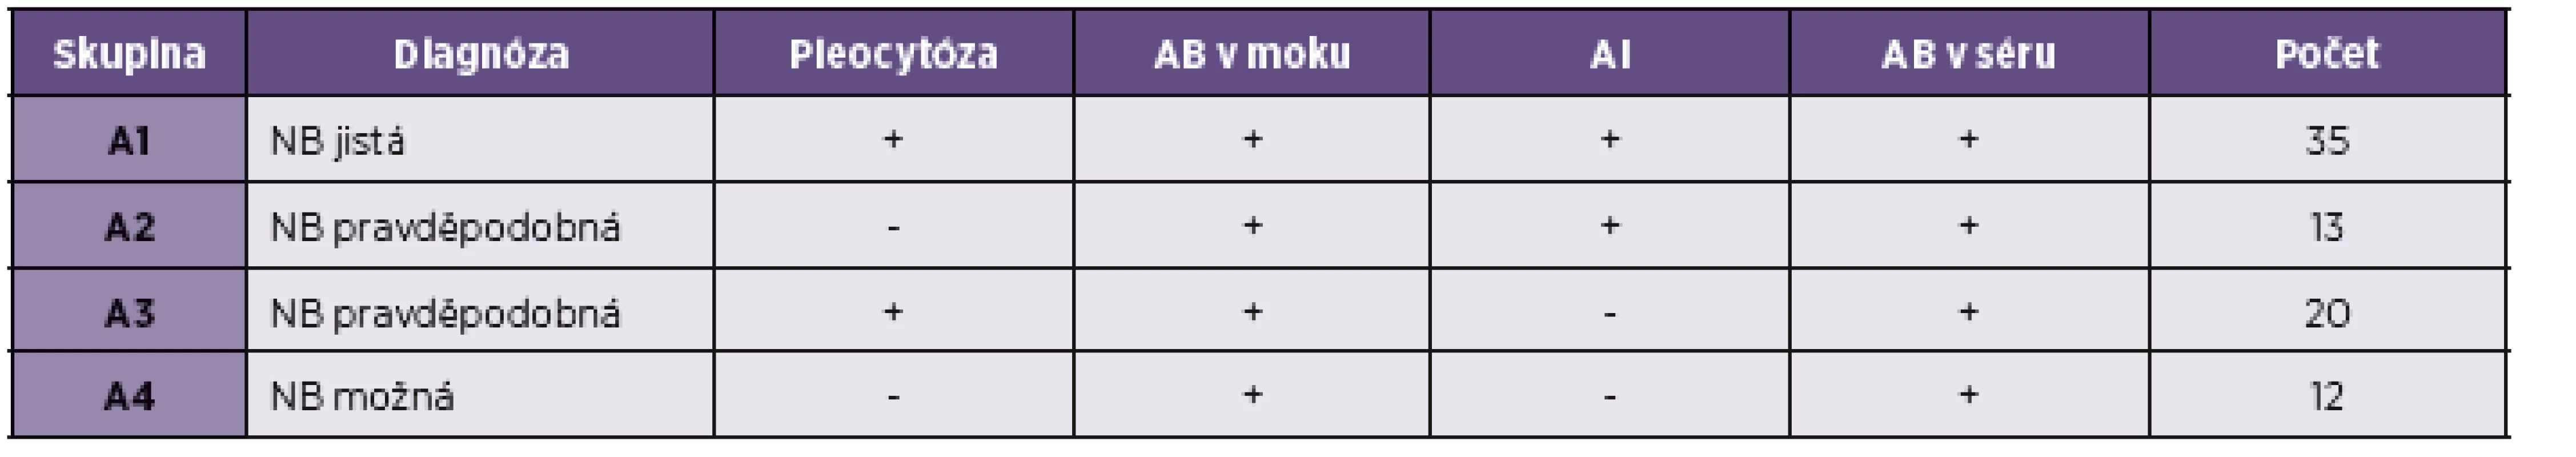 Rozdělení pacientů do skupin podle kritérií neuroborreliózy
AB protilátky, AI protilátkový index
Table 1. Stratification of patients into groups according to the criteria of neuroborreliosis
AB antibodies, AI antibodies index